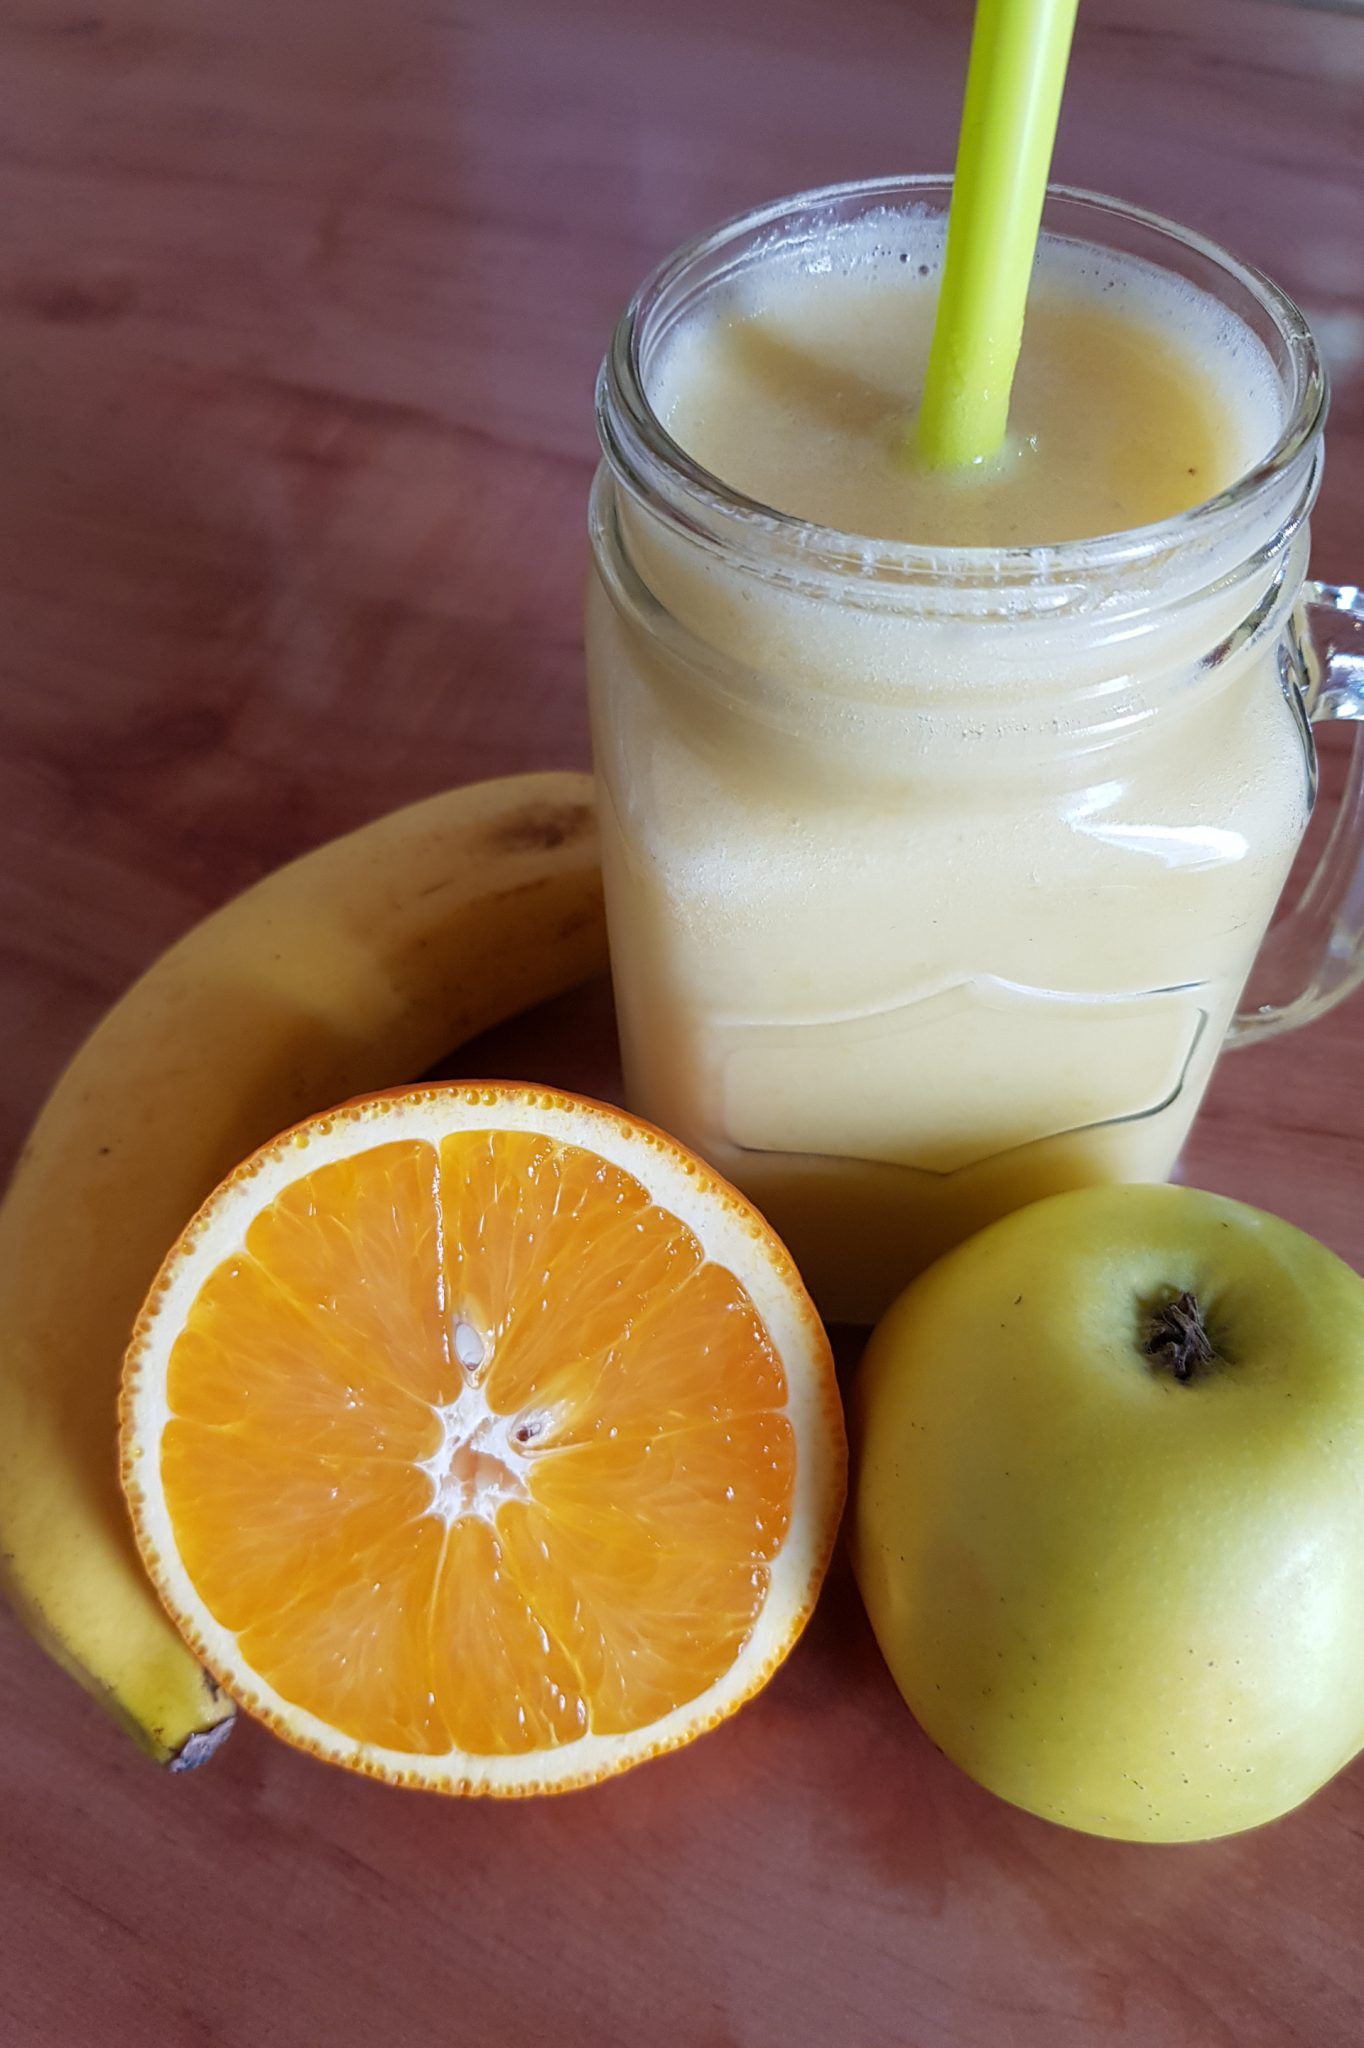 How to make banana, apple and orange smoothie